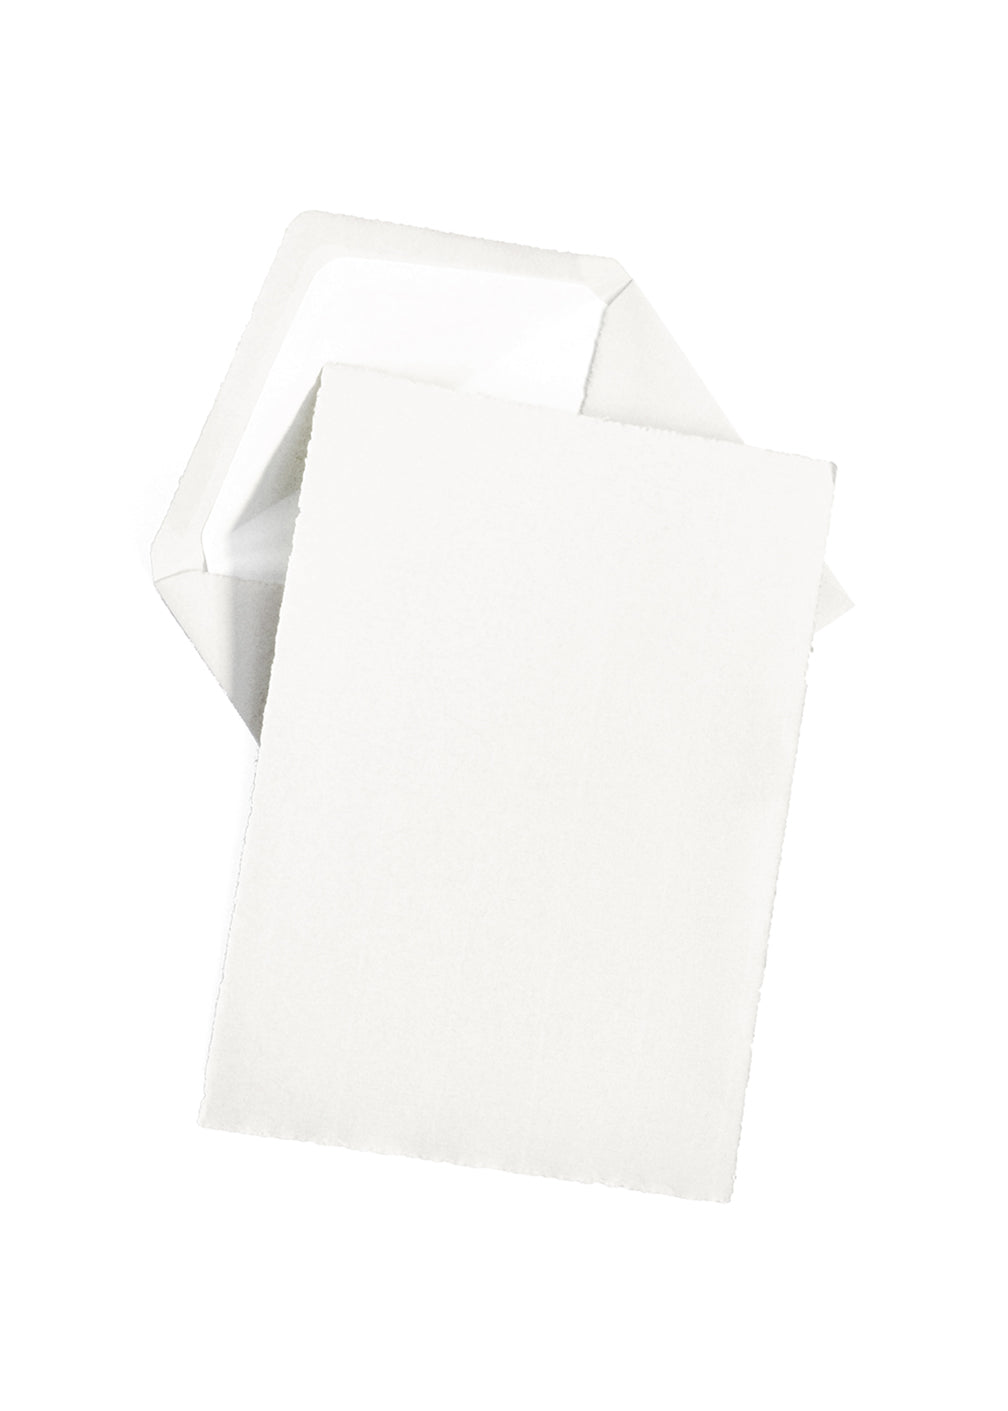 A5 Notecard Box Set of 25 - White